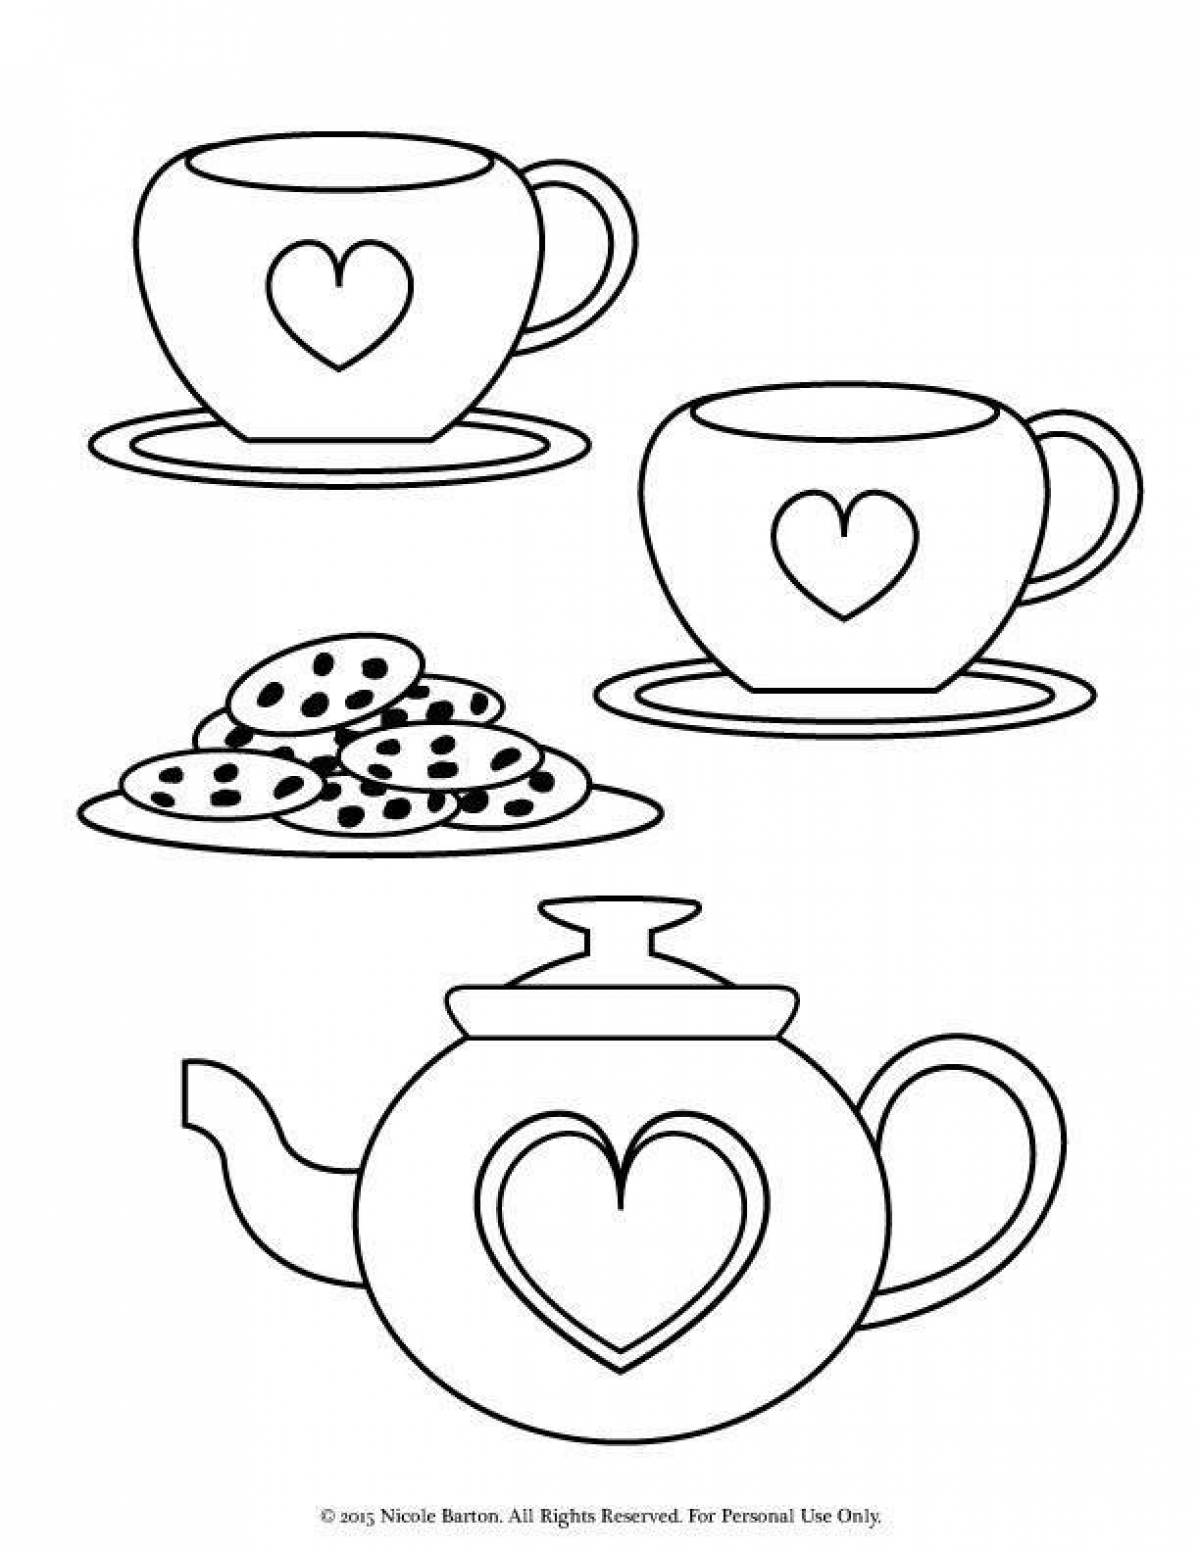 Coloring serene tea set